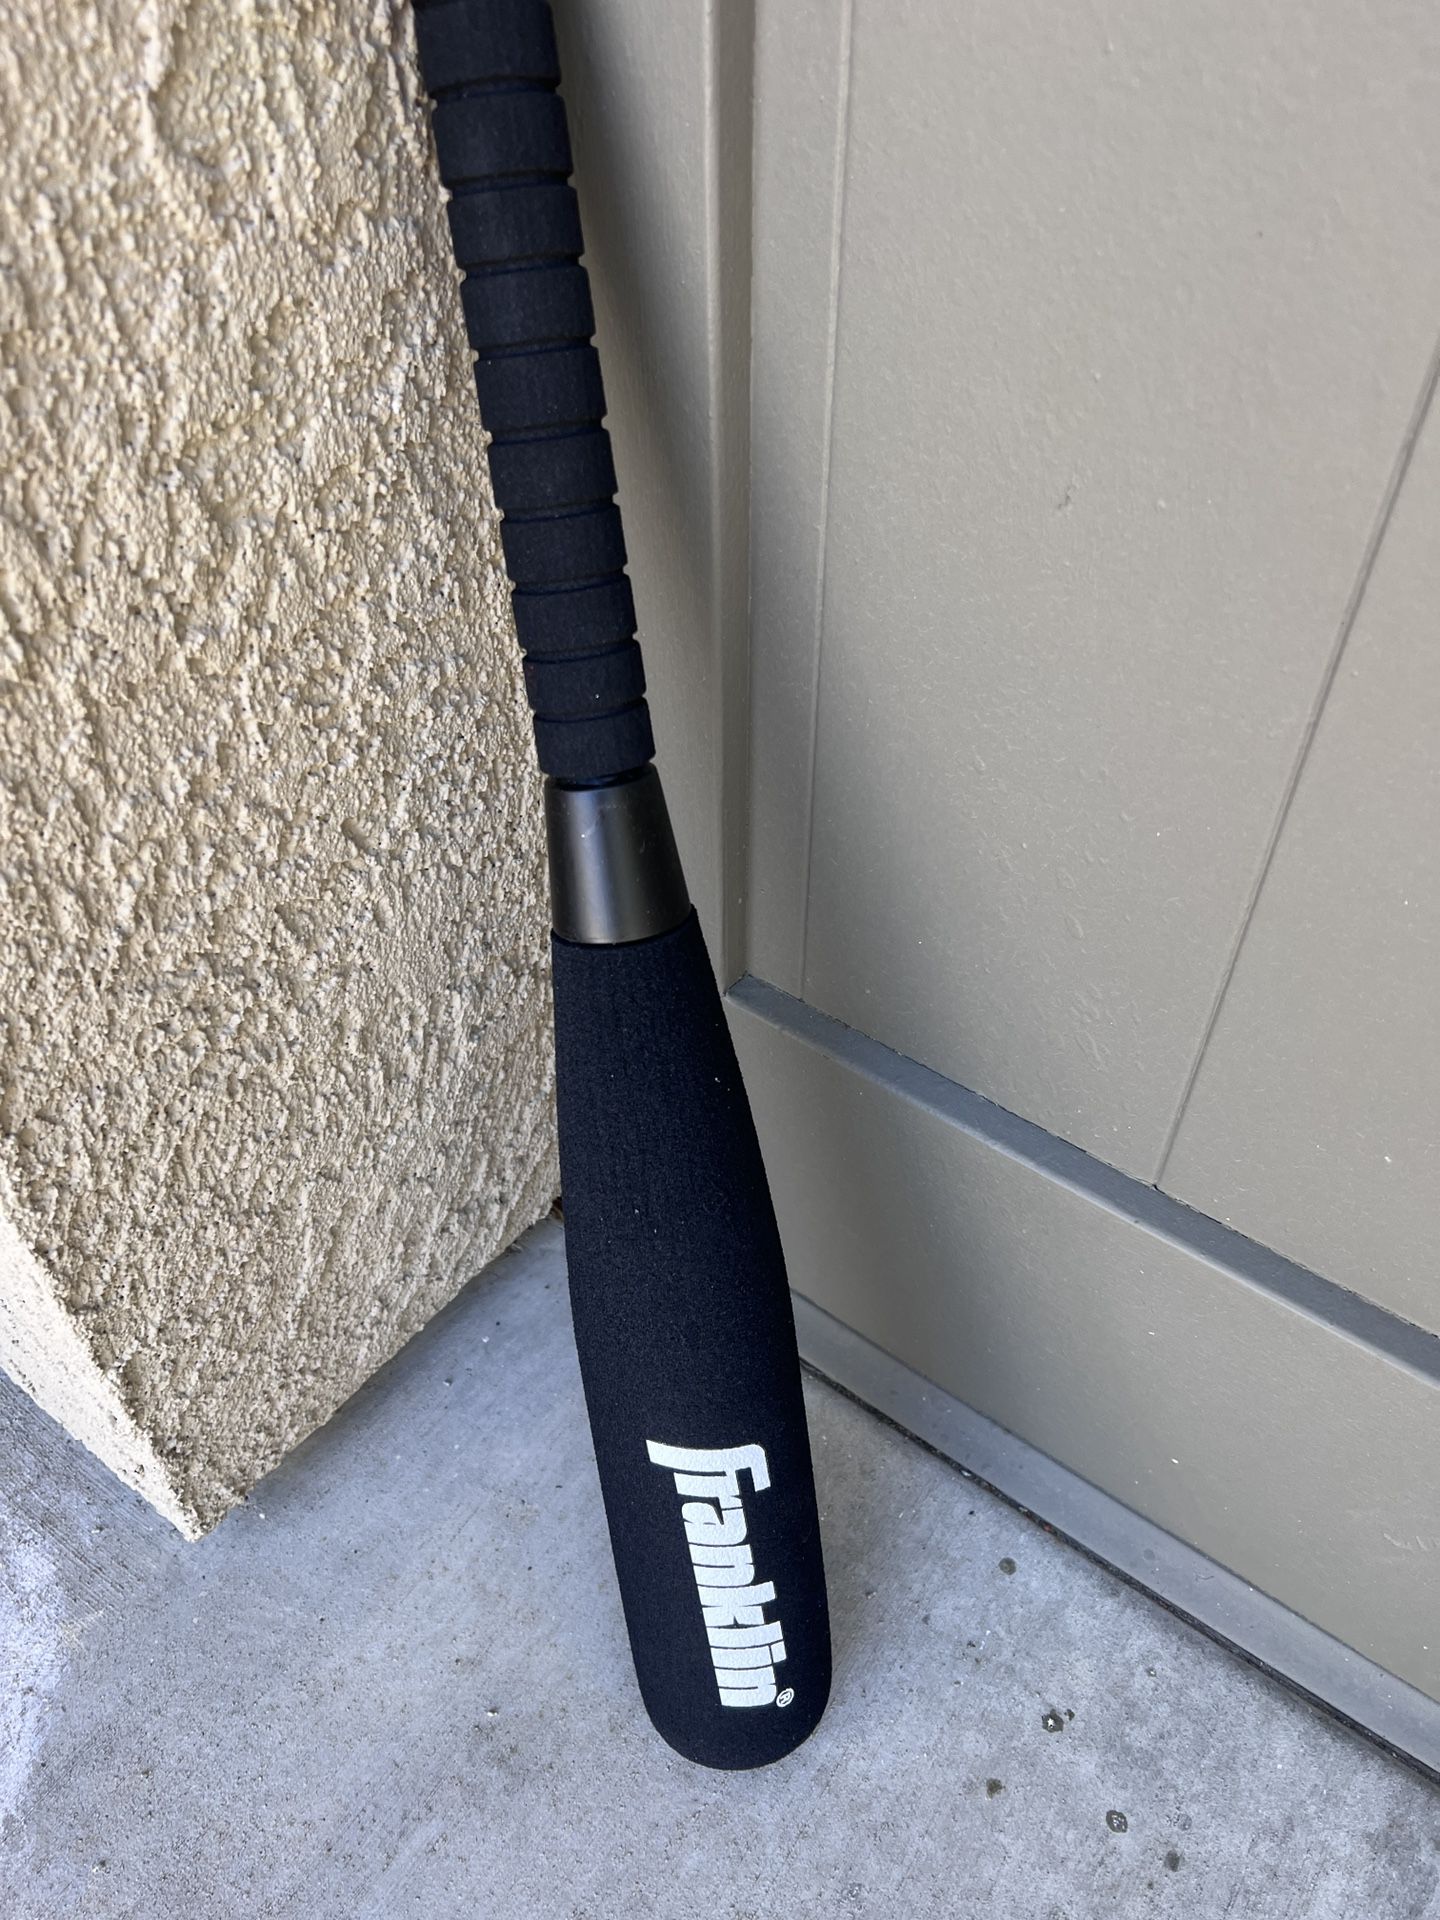 Baseball ⚾️ Bat Foam New. 